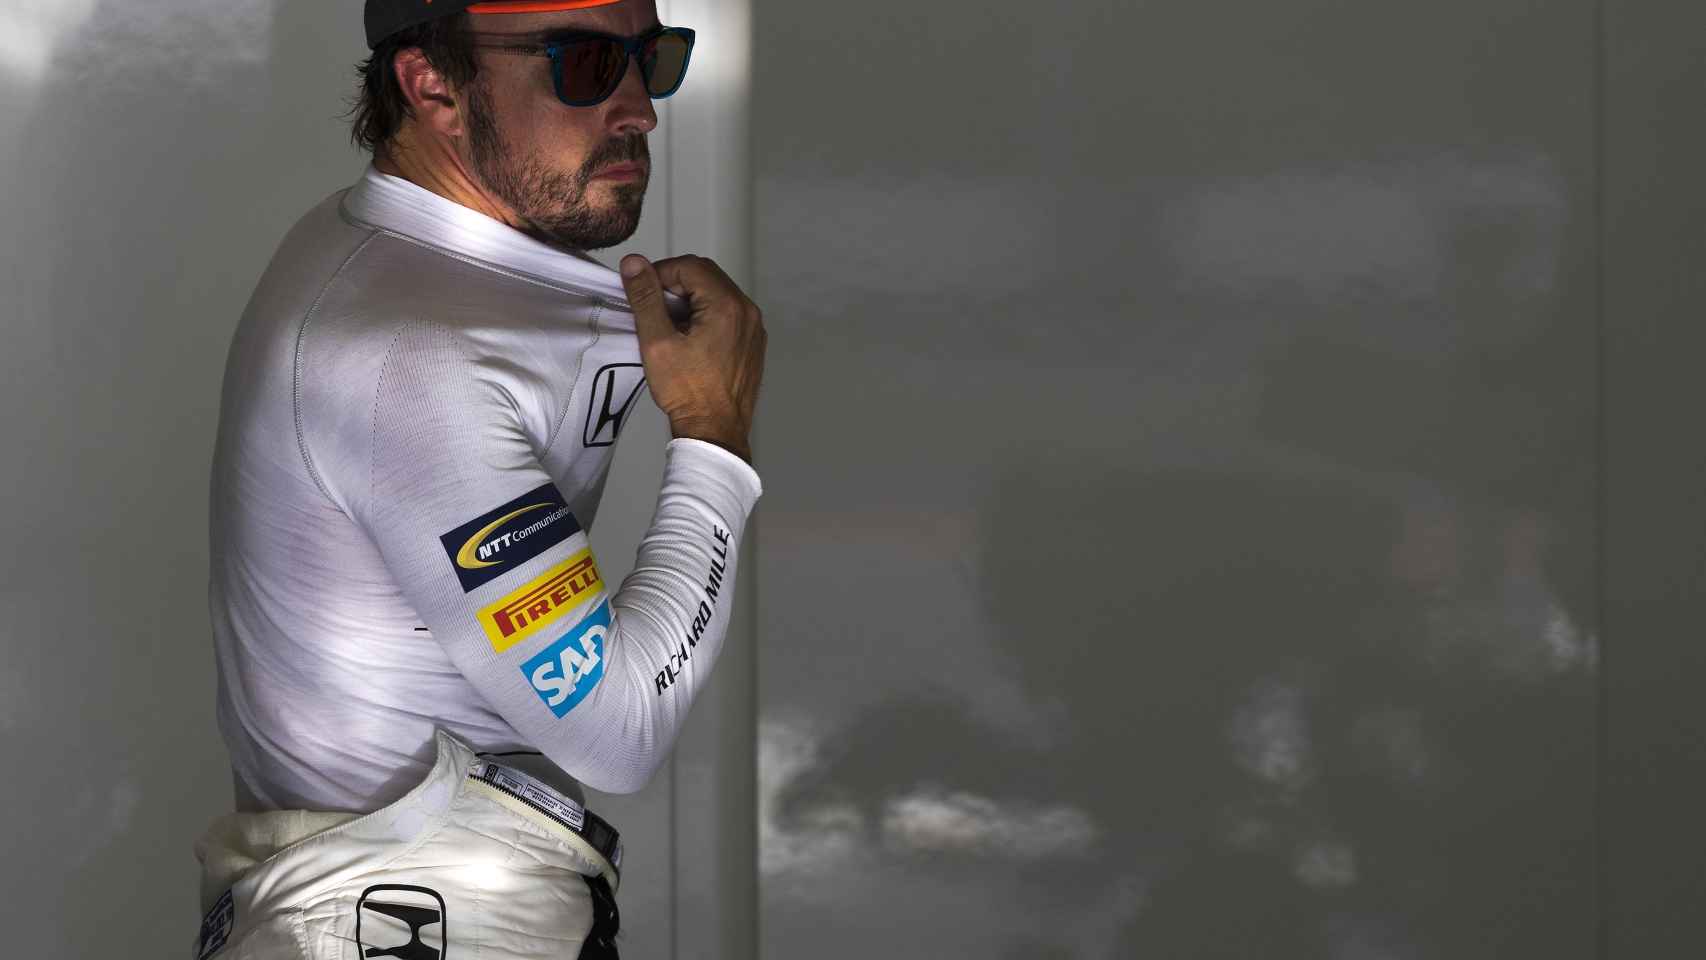 Fernando Alonso en su box en Bahrein.